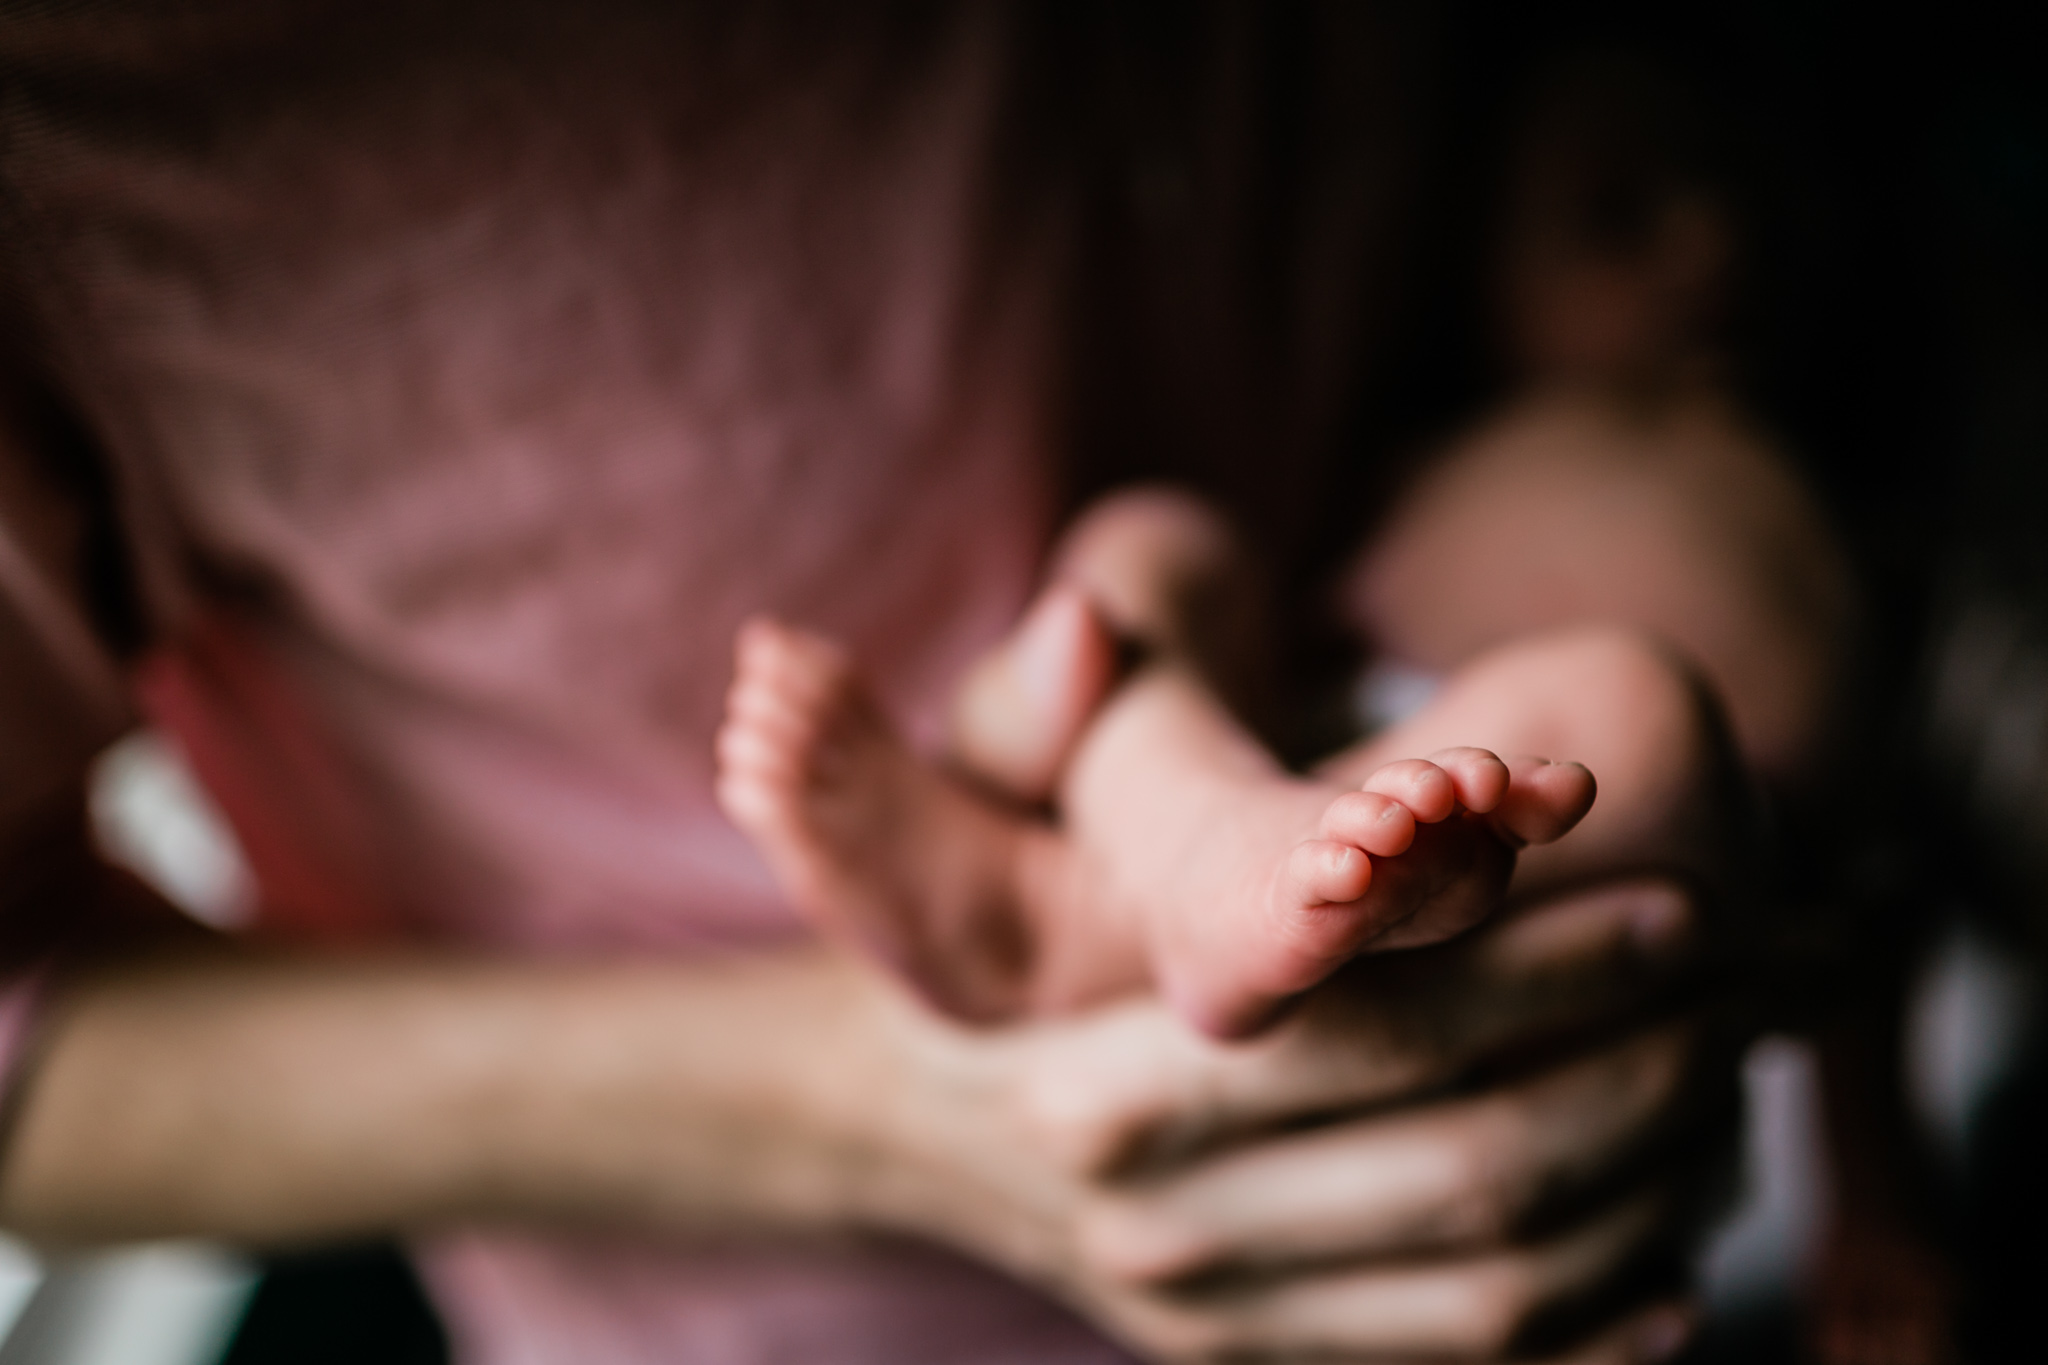 Durham Newborn Photographer | By G. Lin Photography | Close up photos of baby's feet